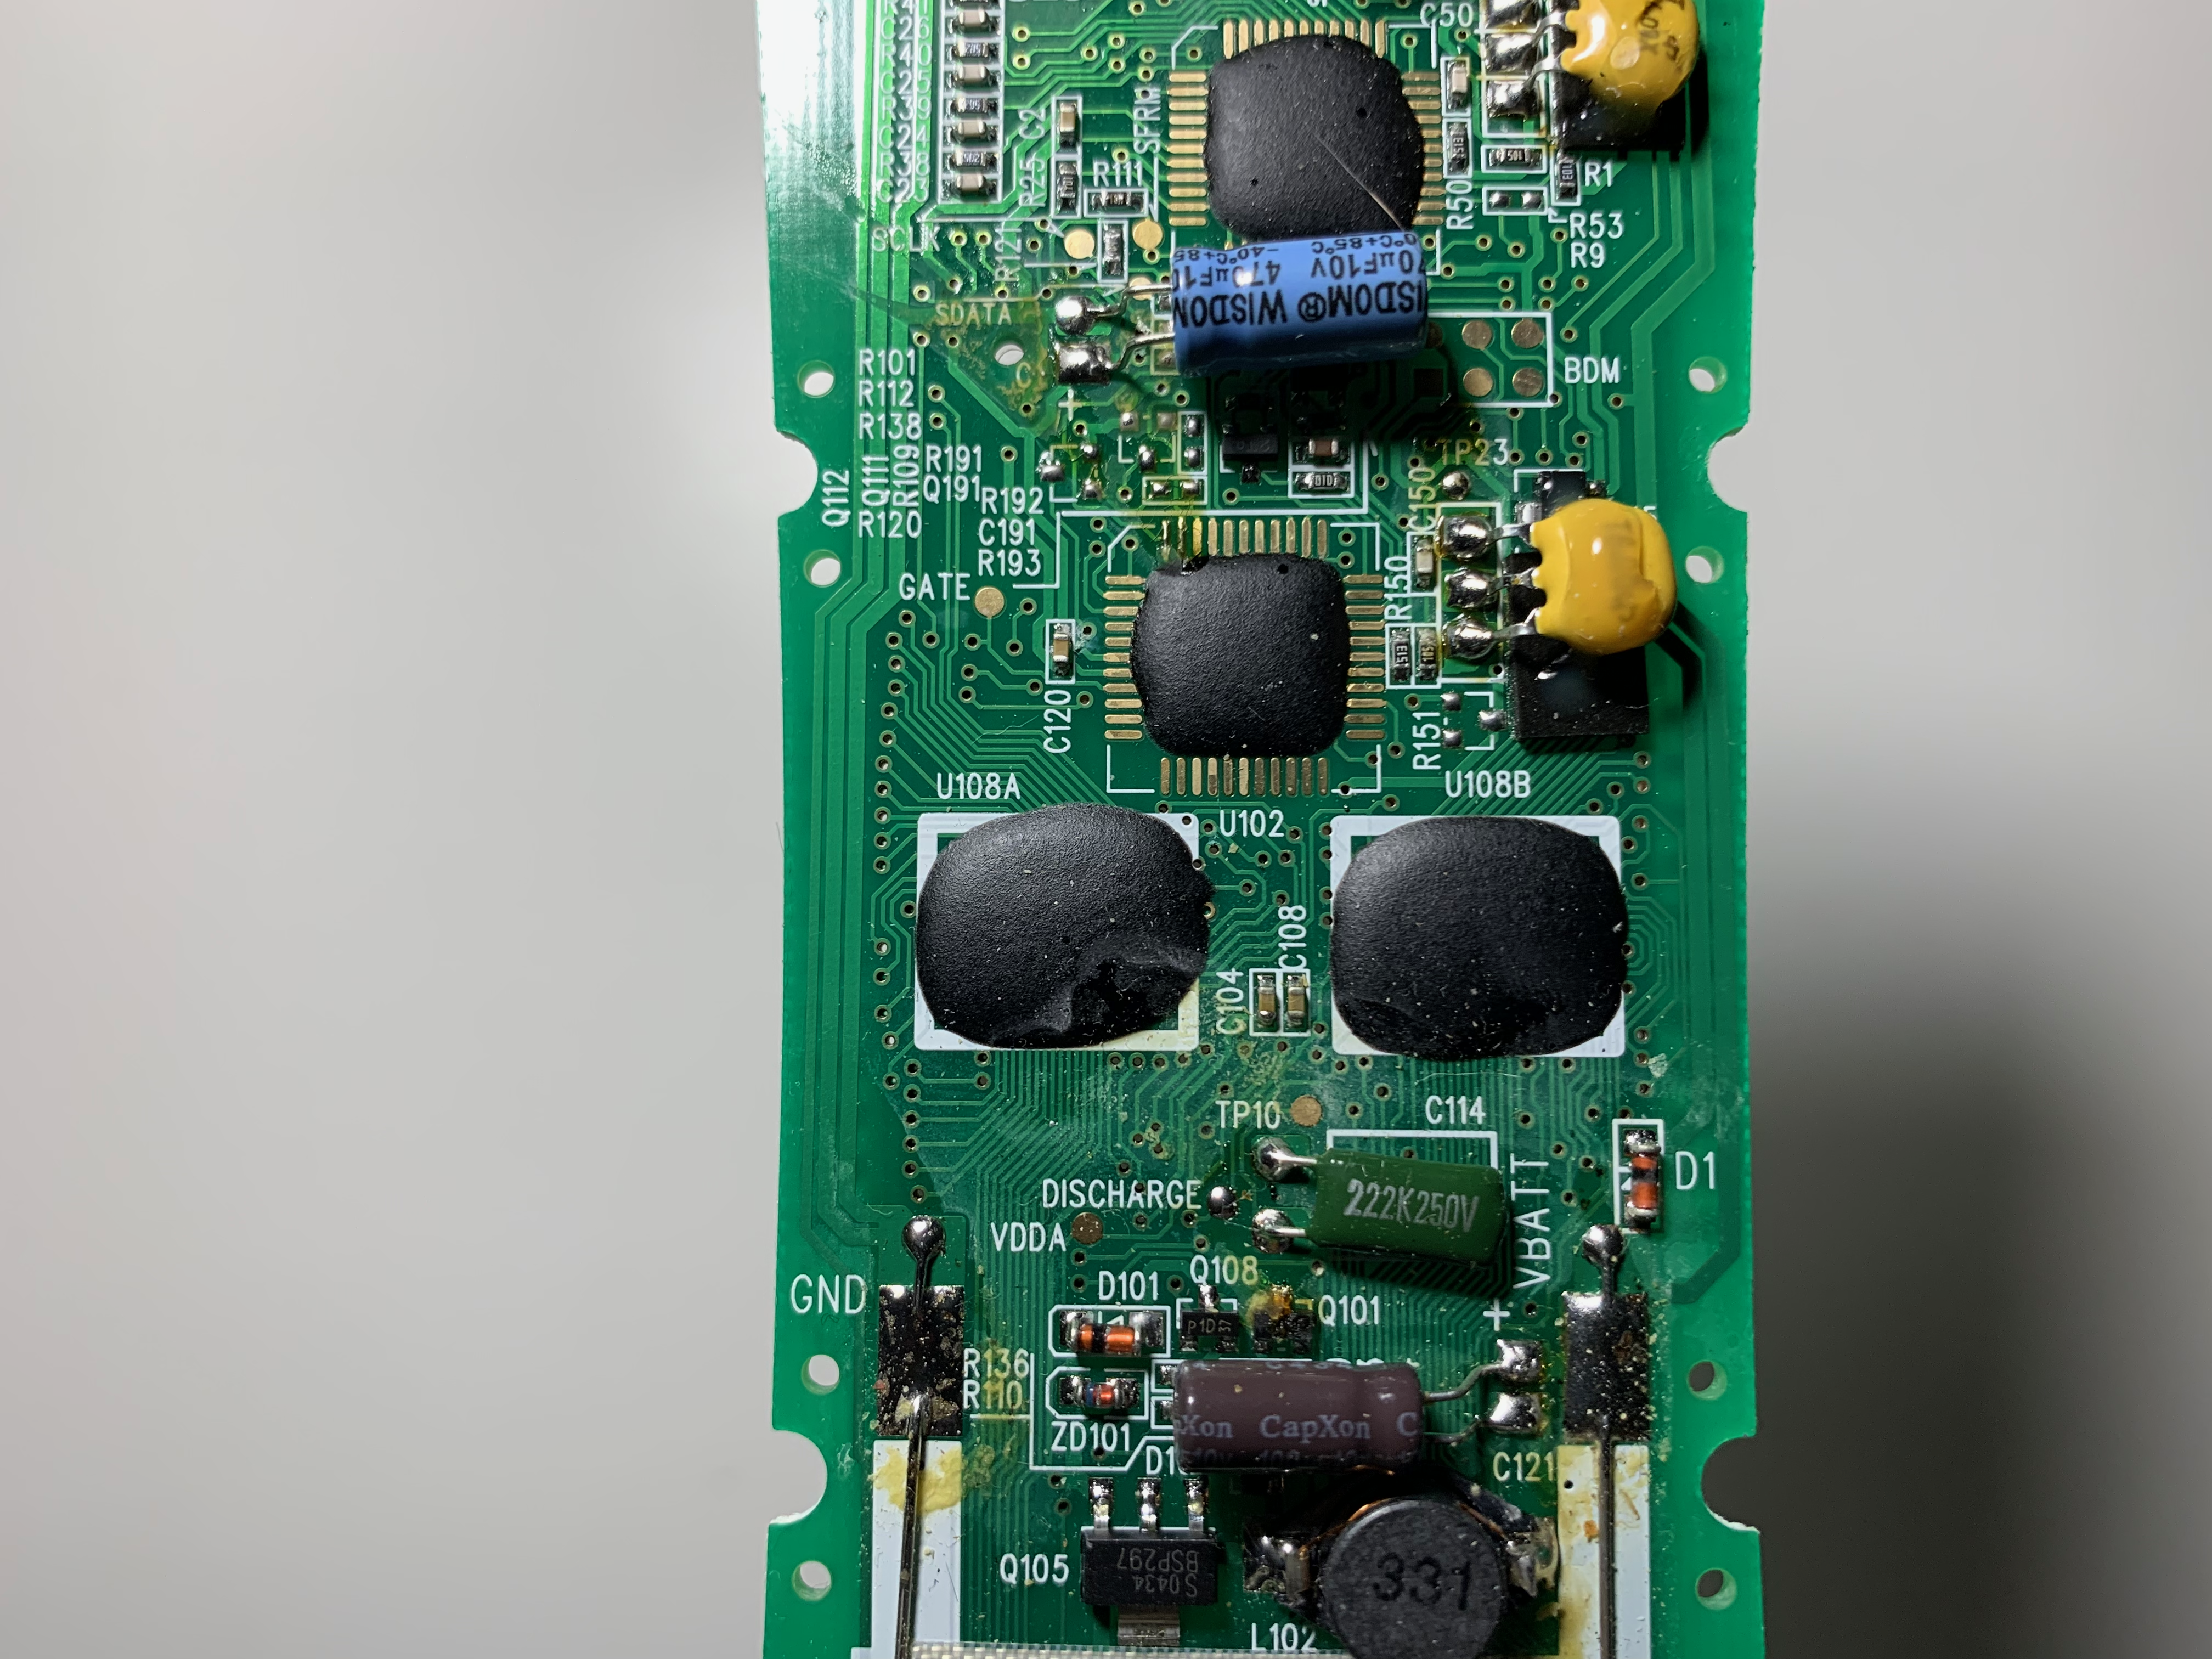 Circuitboard Back Closeup 2